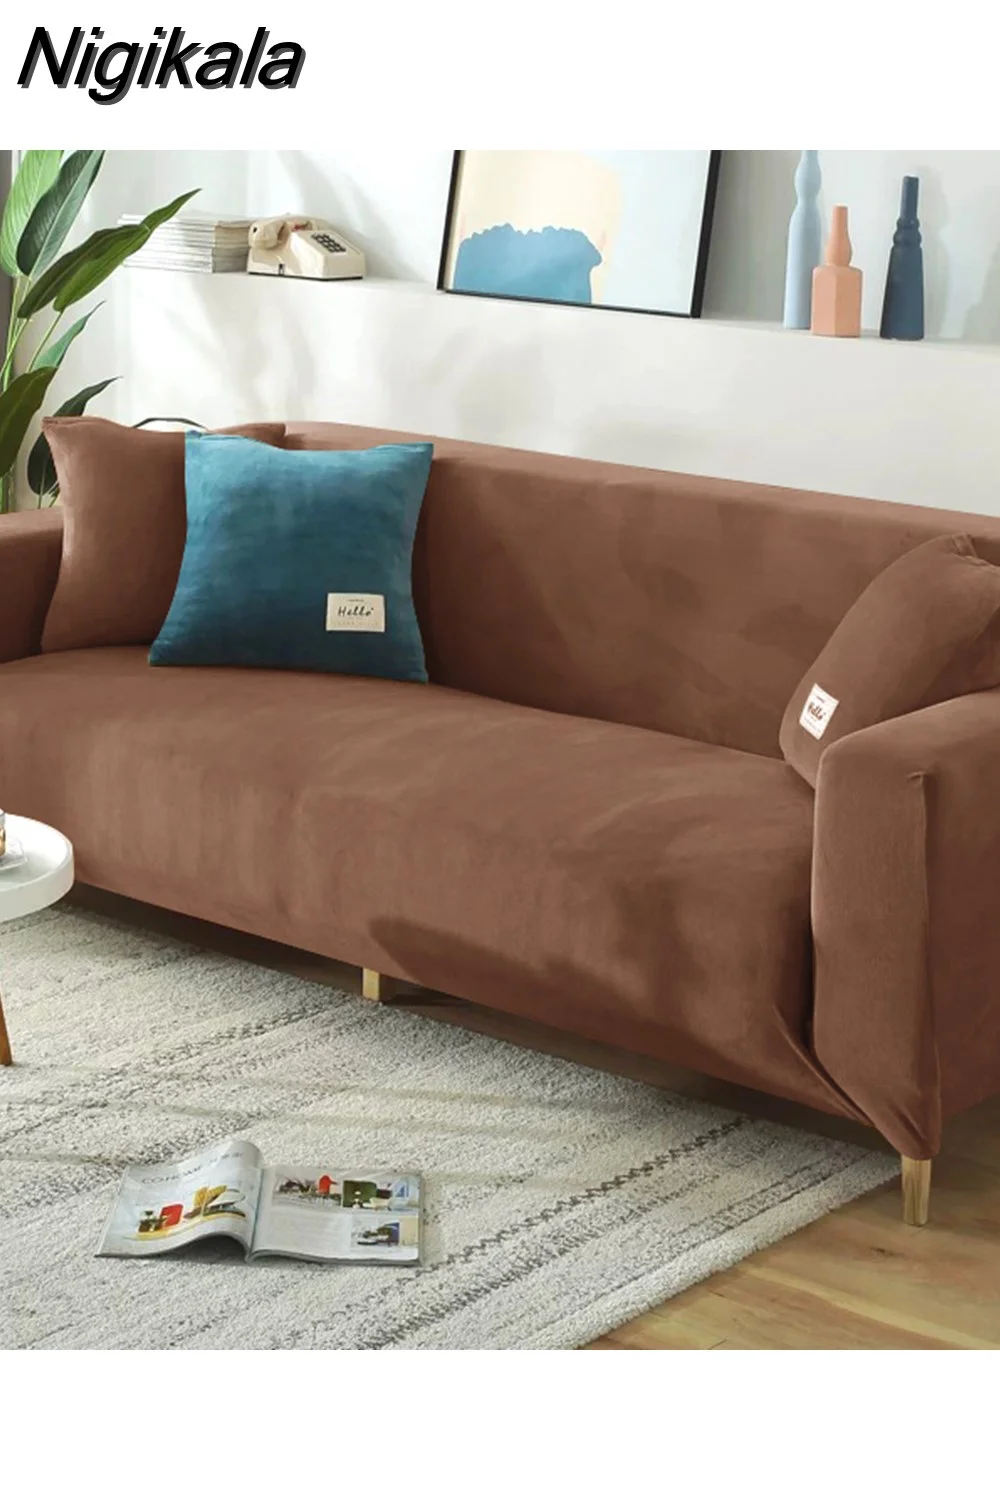 Nigikala Seater Velvet Sofa Cover Elastic Sectional Couch Slipcover L Shaped Corner Armchair Chaise Lounge Covers for Living Room